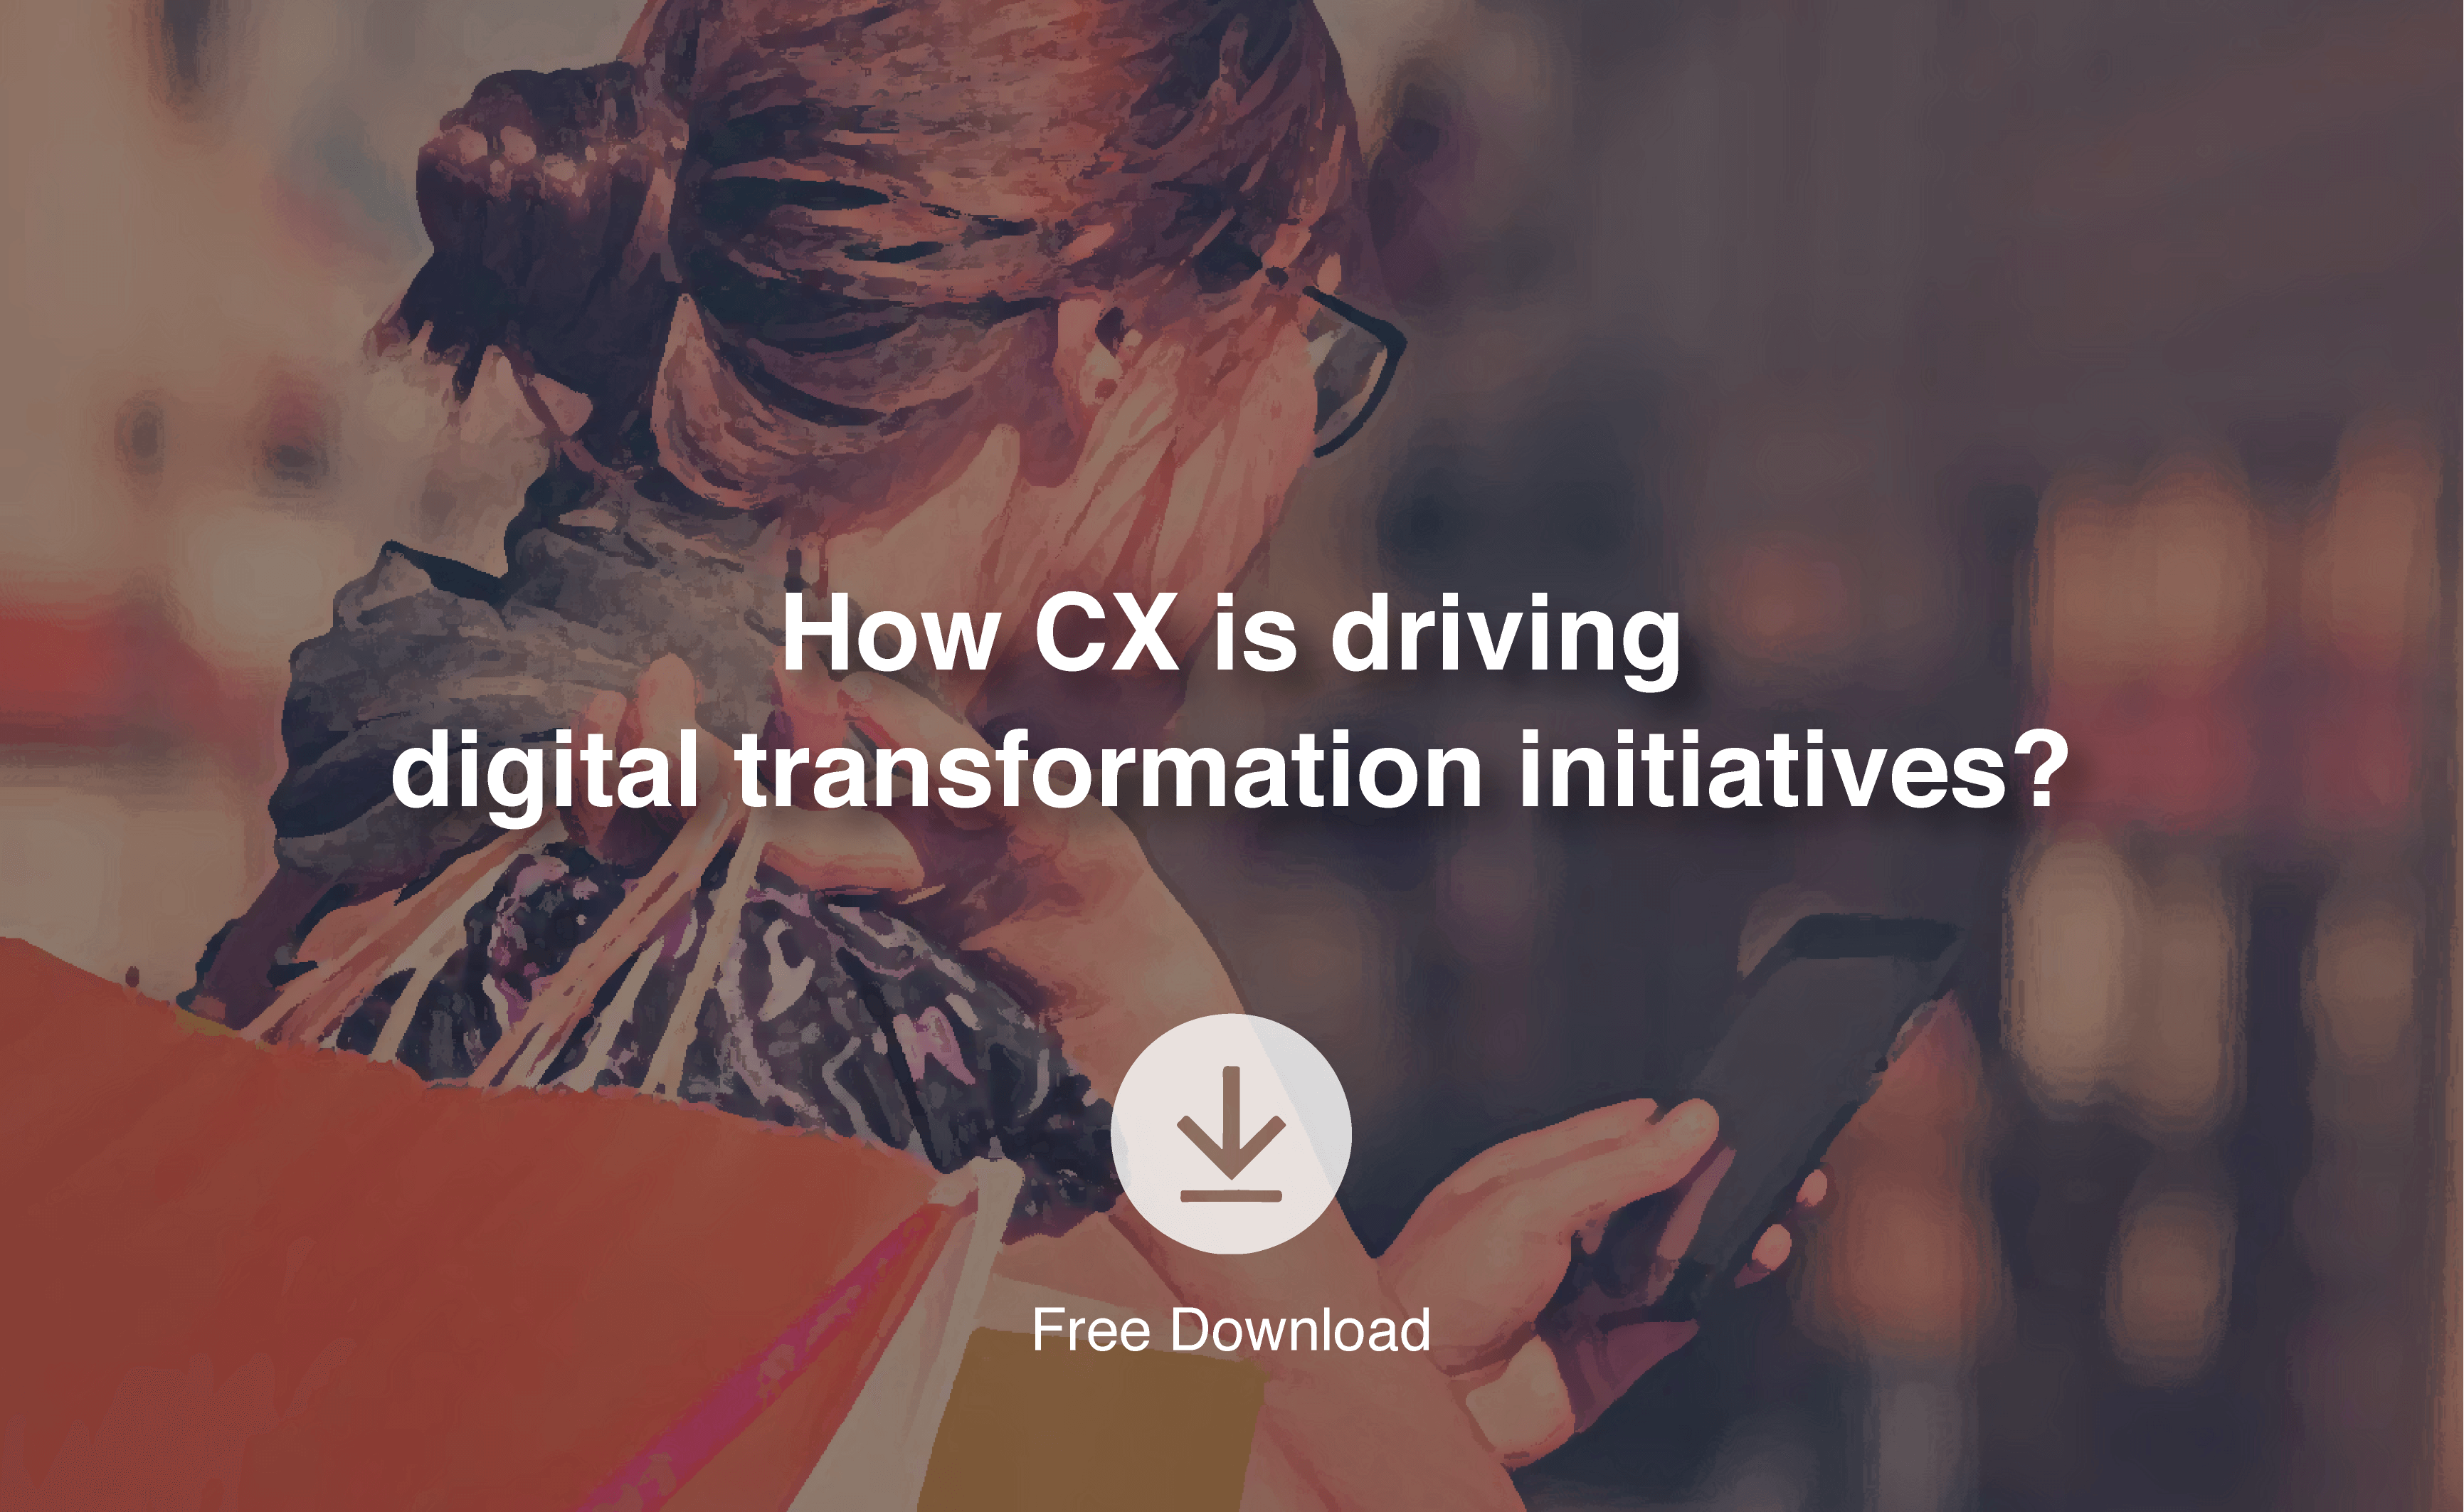 CX and Digital Transformation